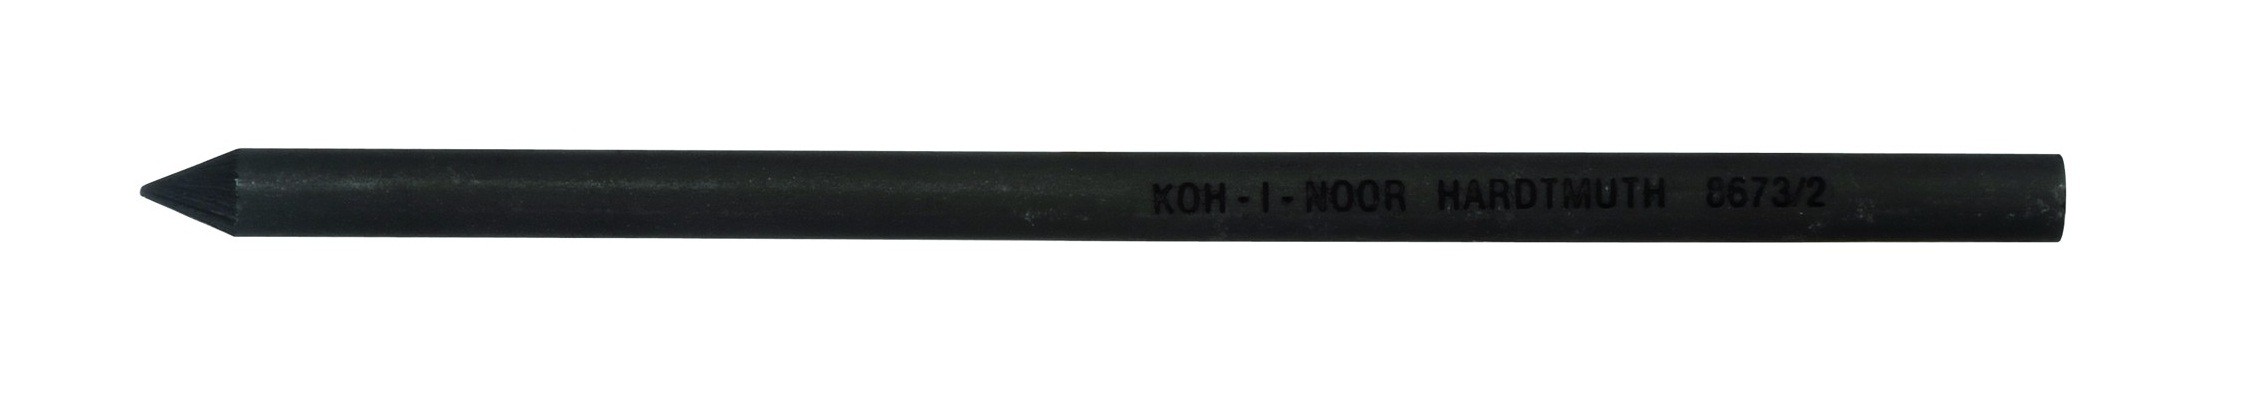 Carbune artificial KOH-I-NOOR 2B, 12 buc/set